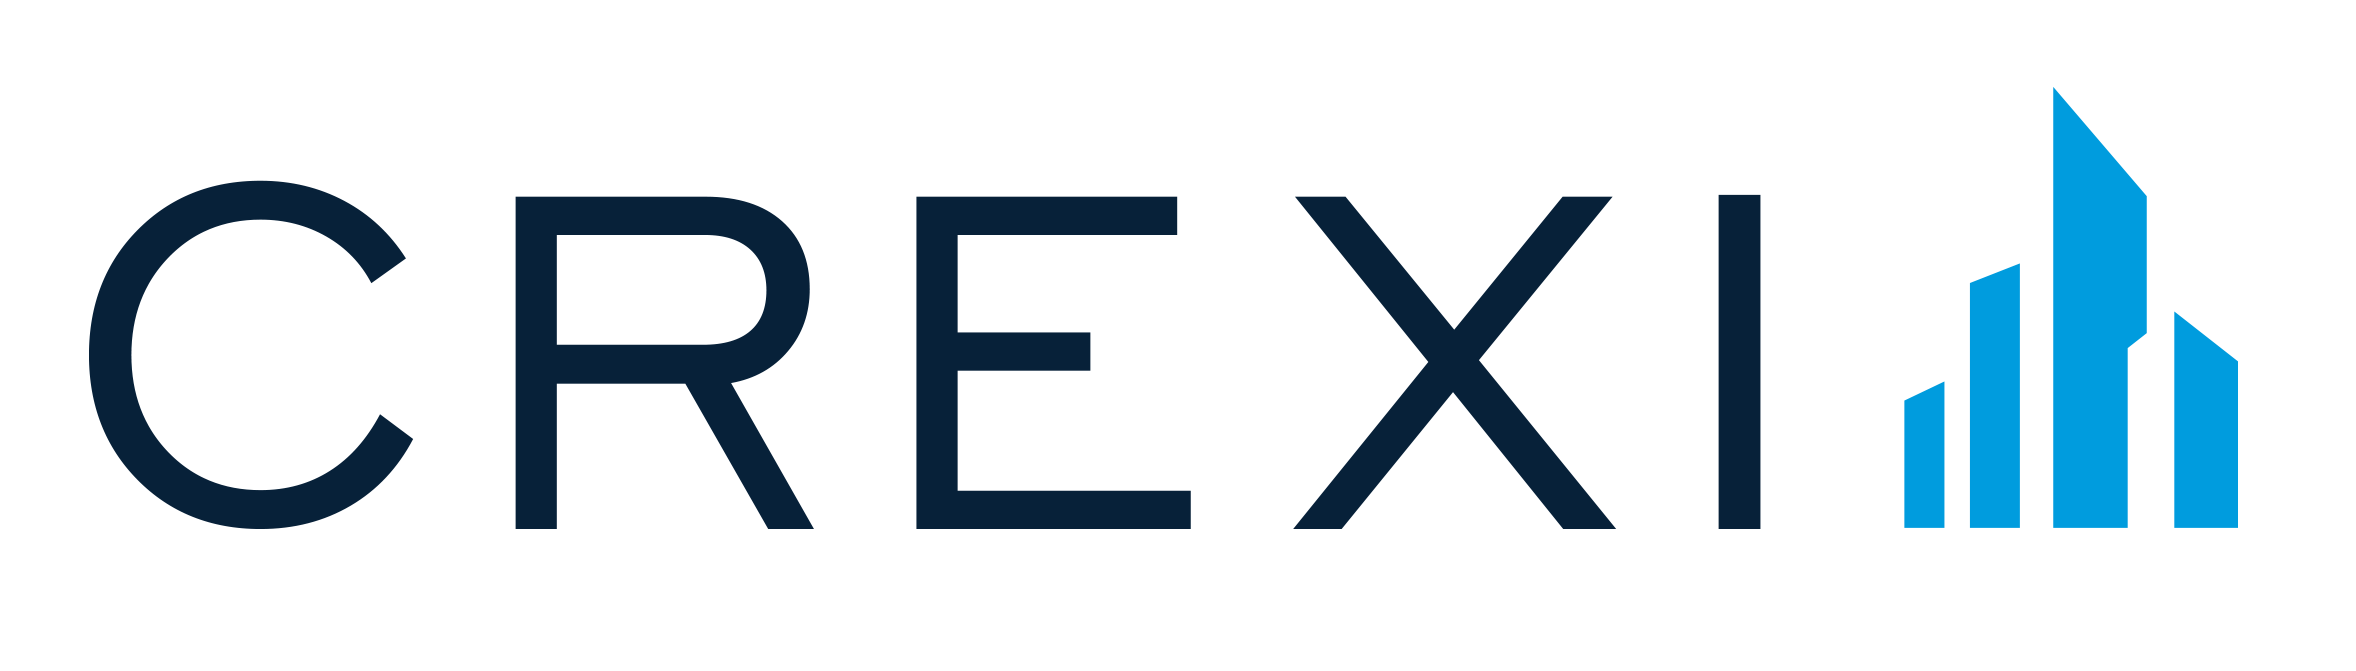 CREXI 2021 C5 Summit Class C Sponsor Logo